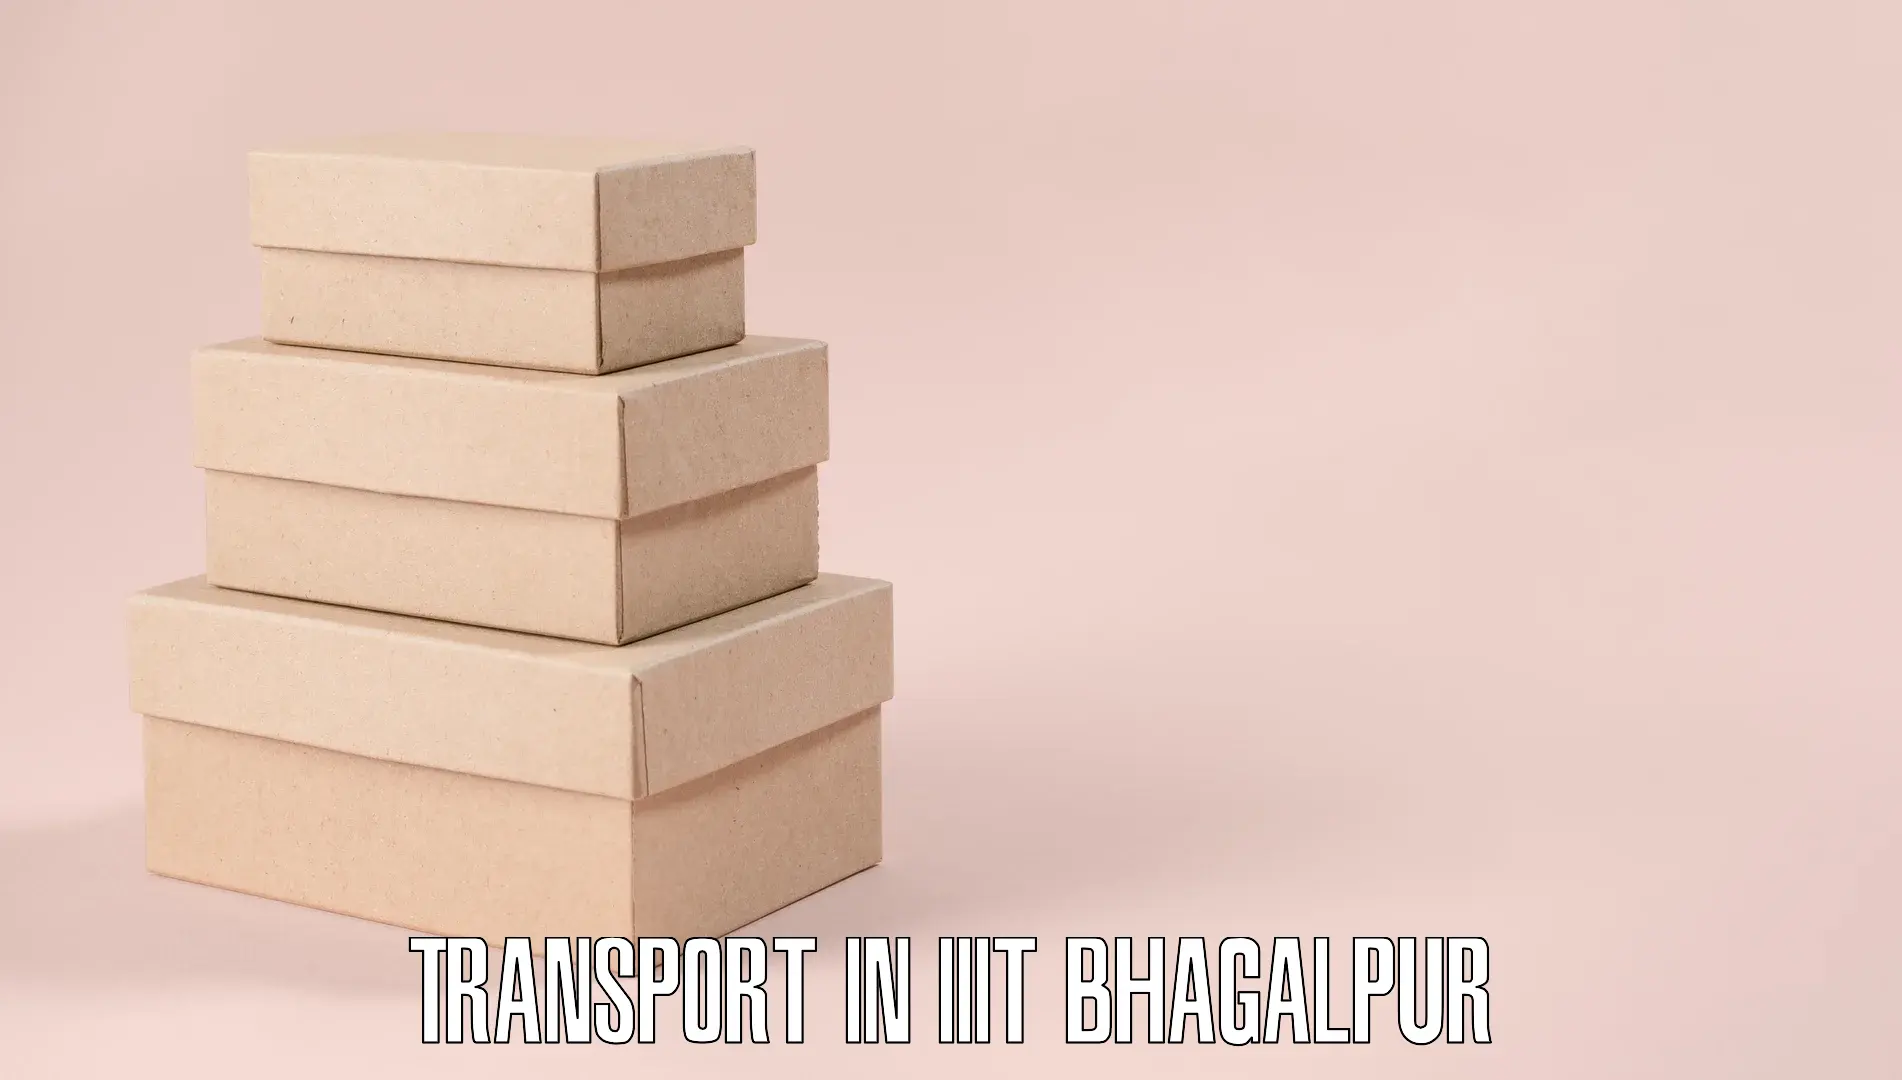 Transport in sharing in IIIT Bhagalpur